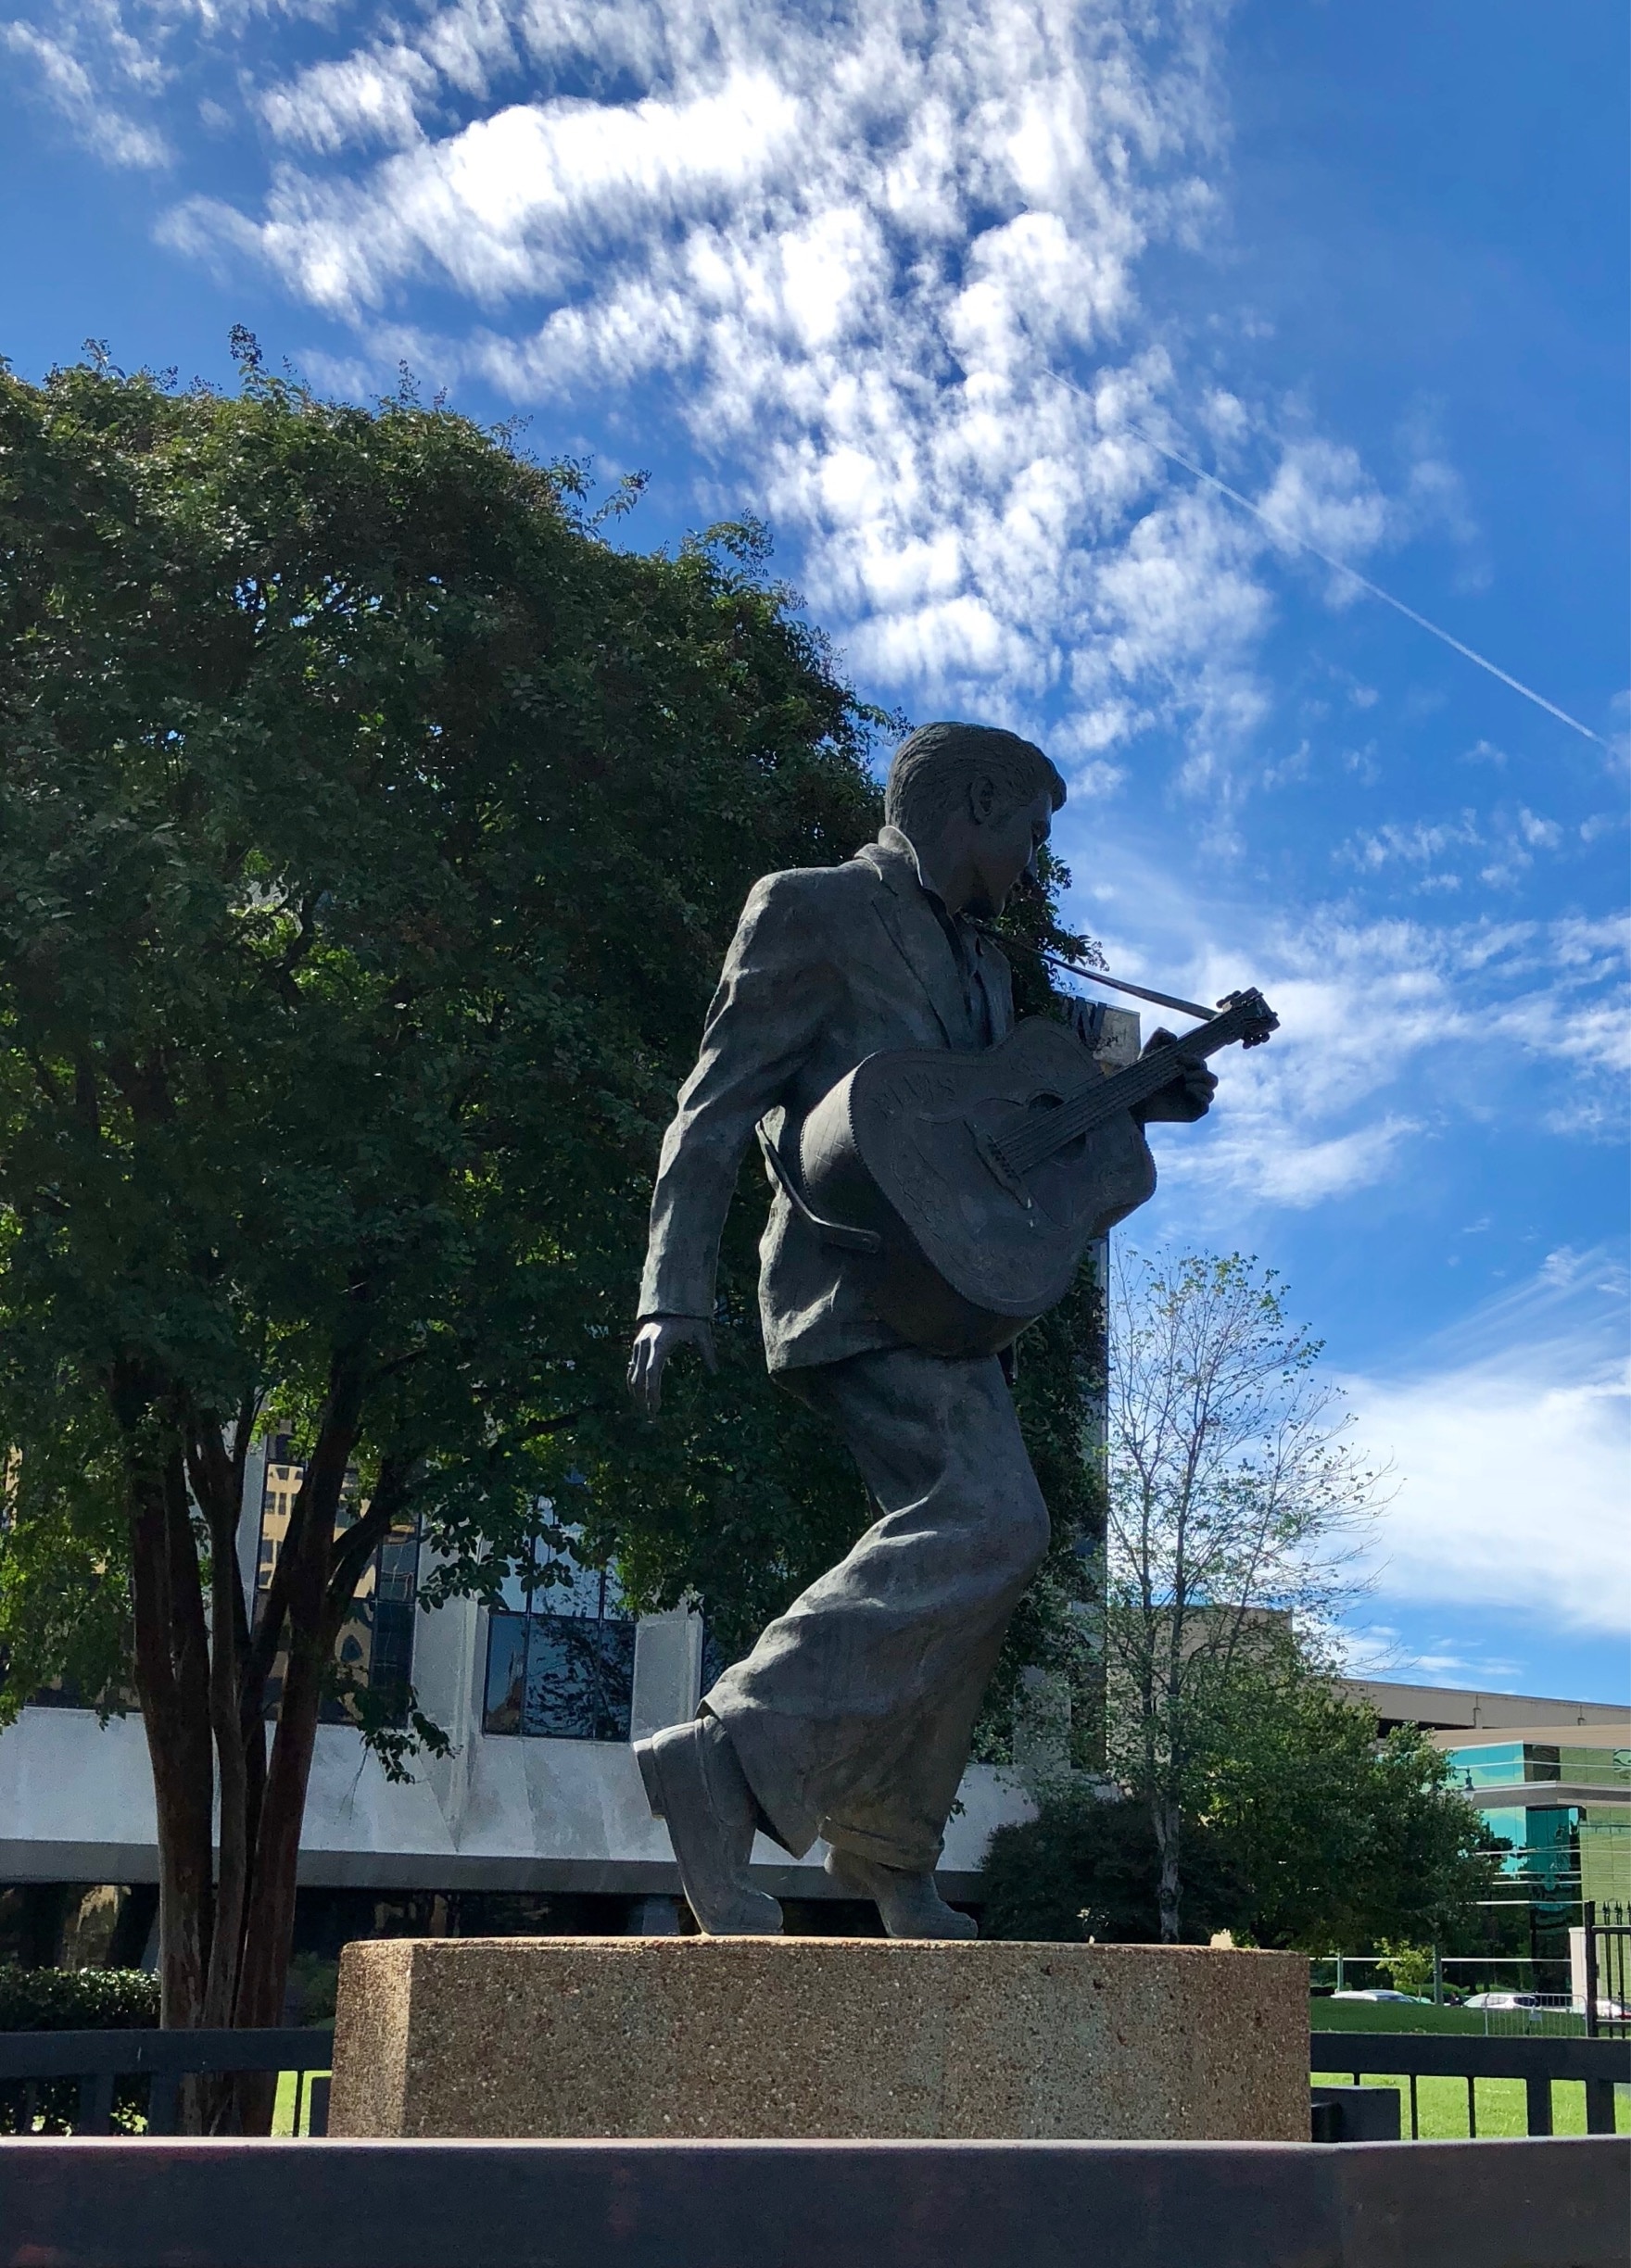 Elvis statue on Beale Street in Memphis. 

(Oct 18)

#Memphis #Elvis